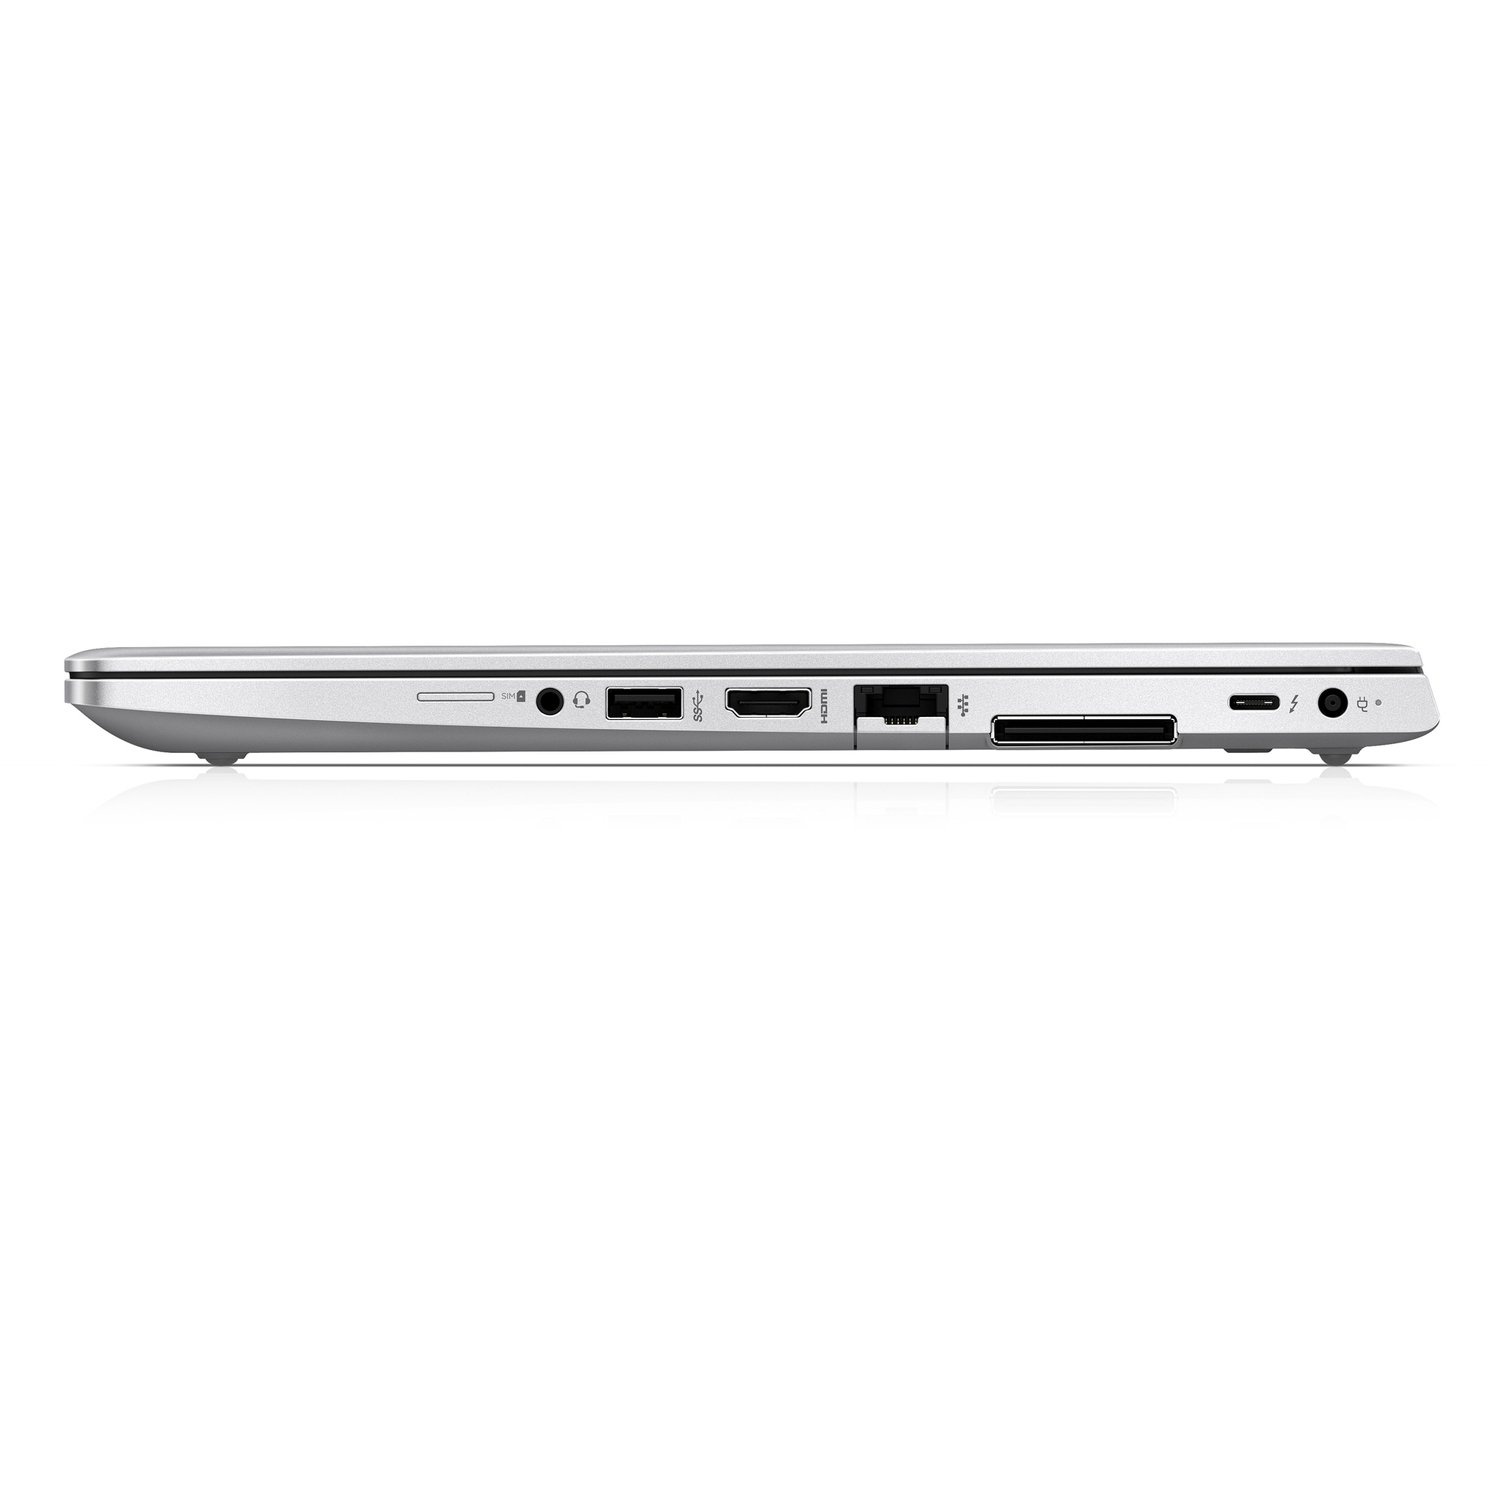 Ноутбук HP Elitebook 830 G5 Core i5-8250U 1.6GHz,13.3" FHD (1920x1080) IPS Sure View AG,8Gb DDR4(1),256Gb SSD,50Wh LL,FPR,1.4kg,3y,Silver,Win10Pro-15981